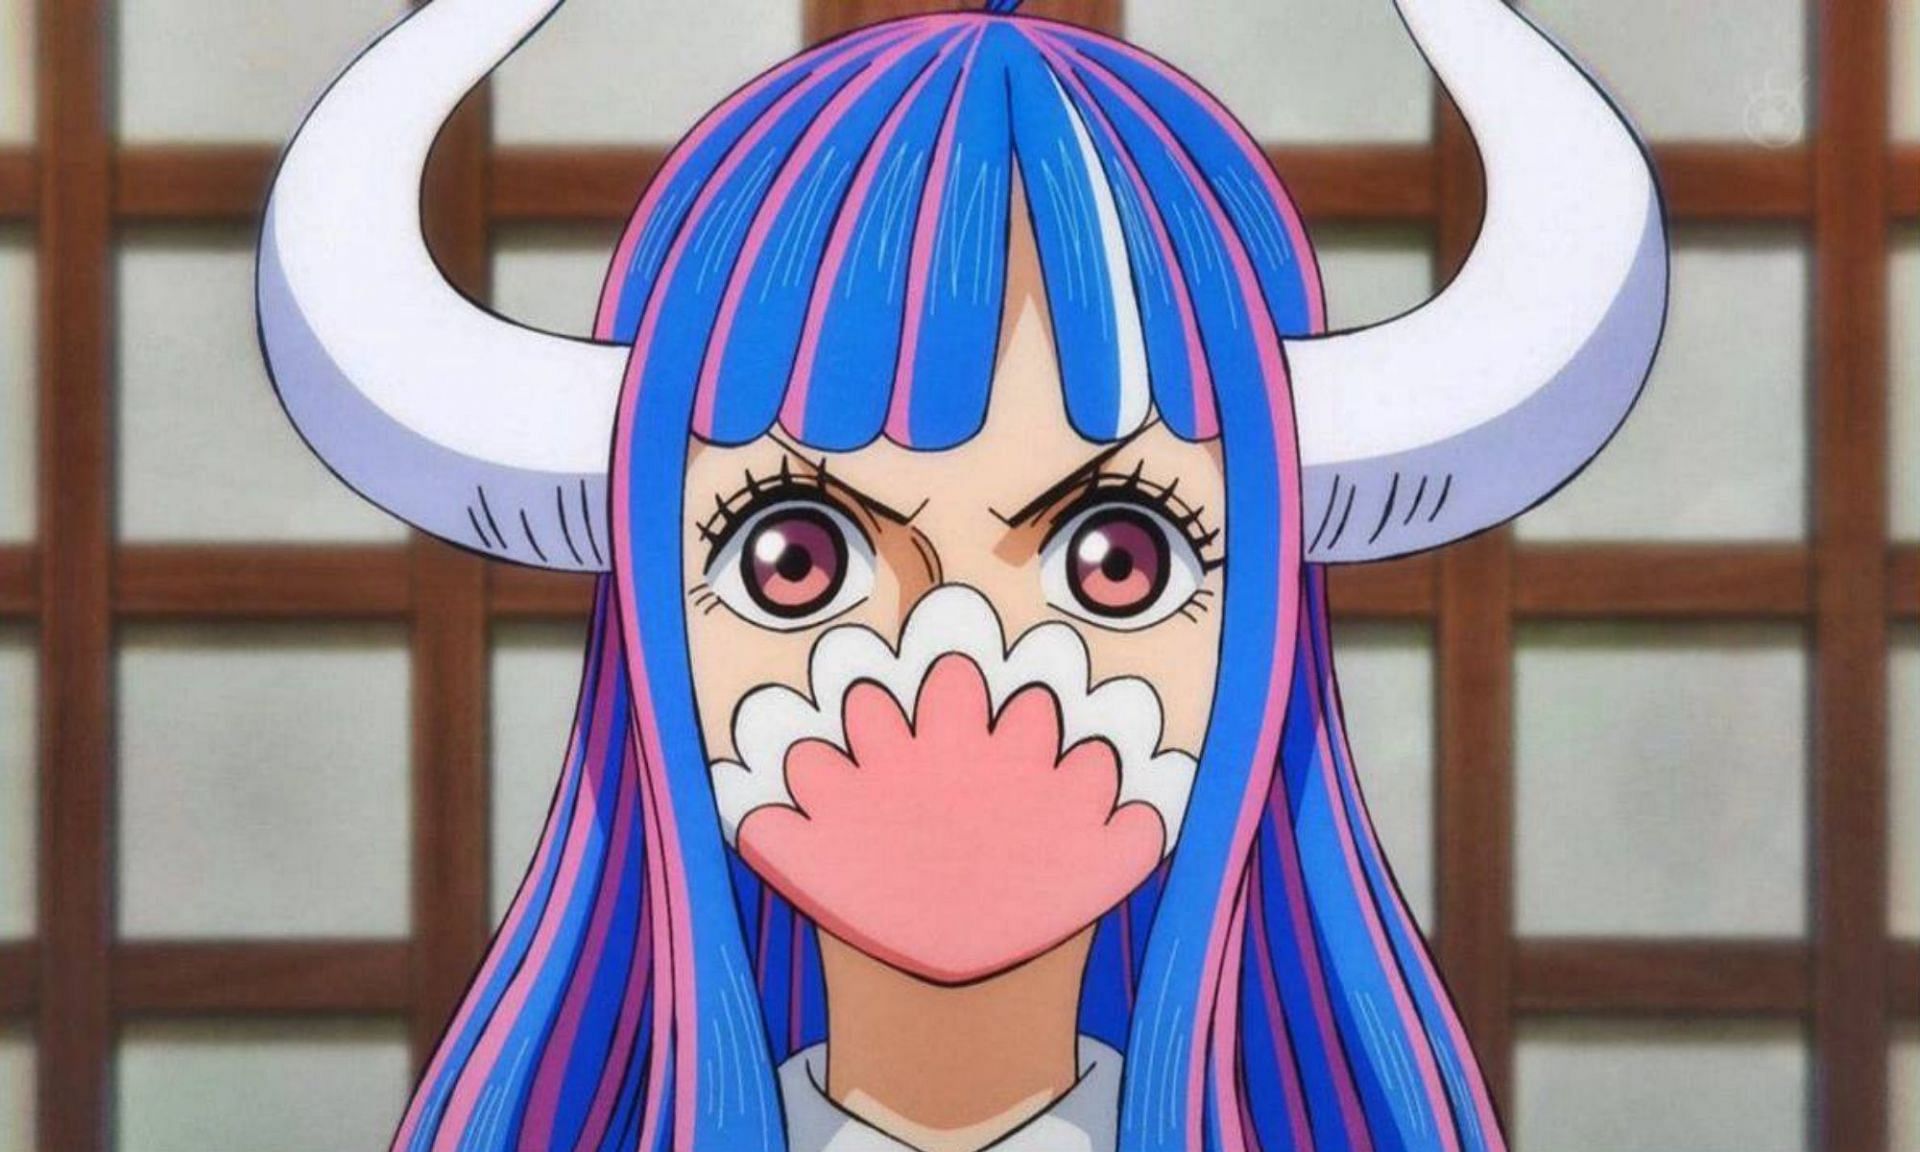 Ulti might be a young adult, but she generally acts very childishly (Image via Eiichiro Oda/Shueisha/Viz Media/One Piece)